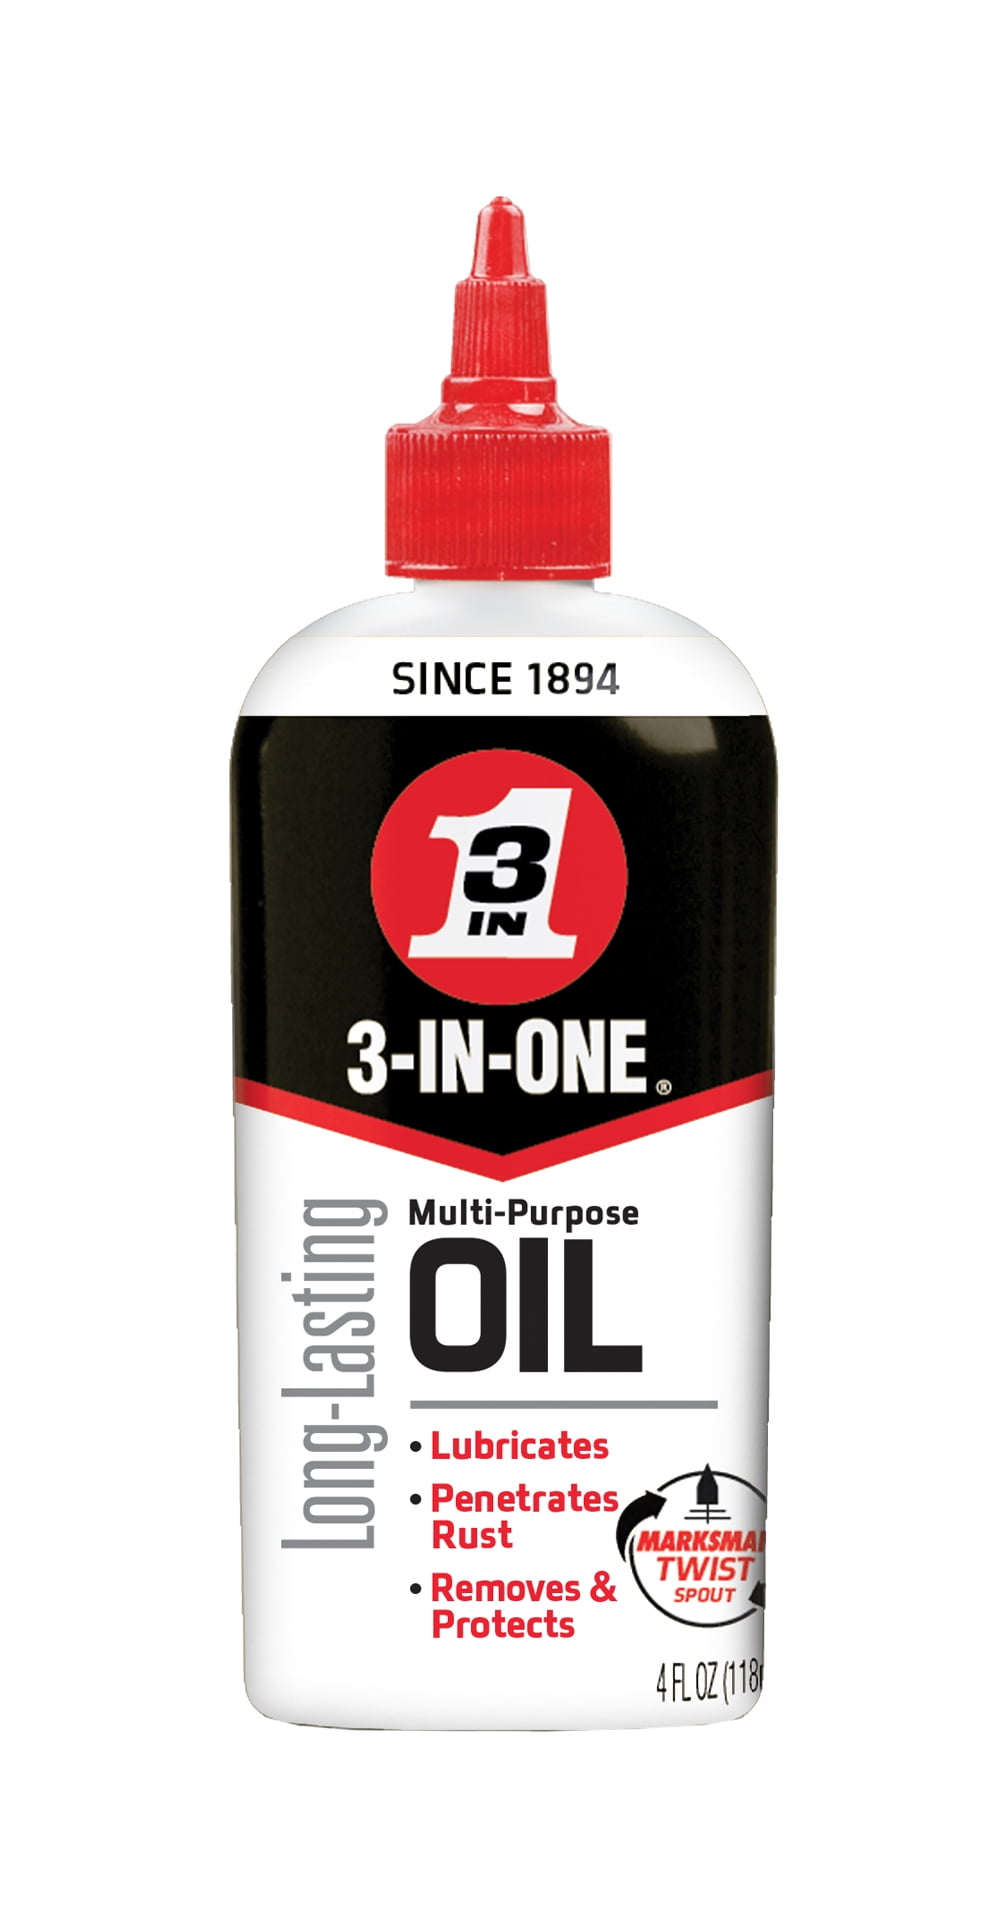 3-IN-ONE Multi-Purpose Oil with Marksman Spout, 4 OZ